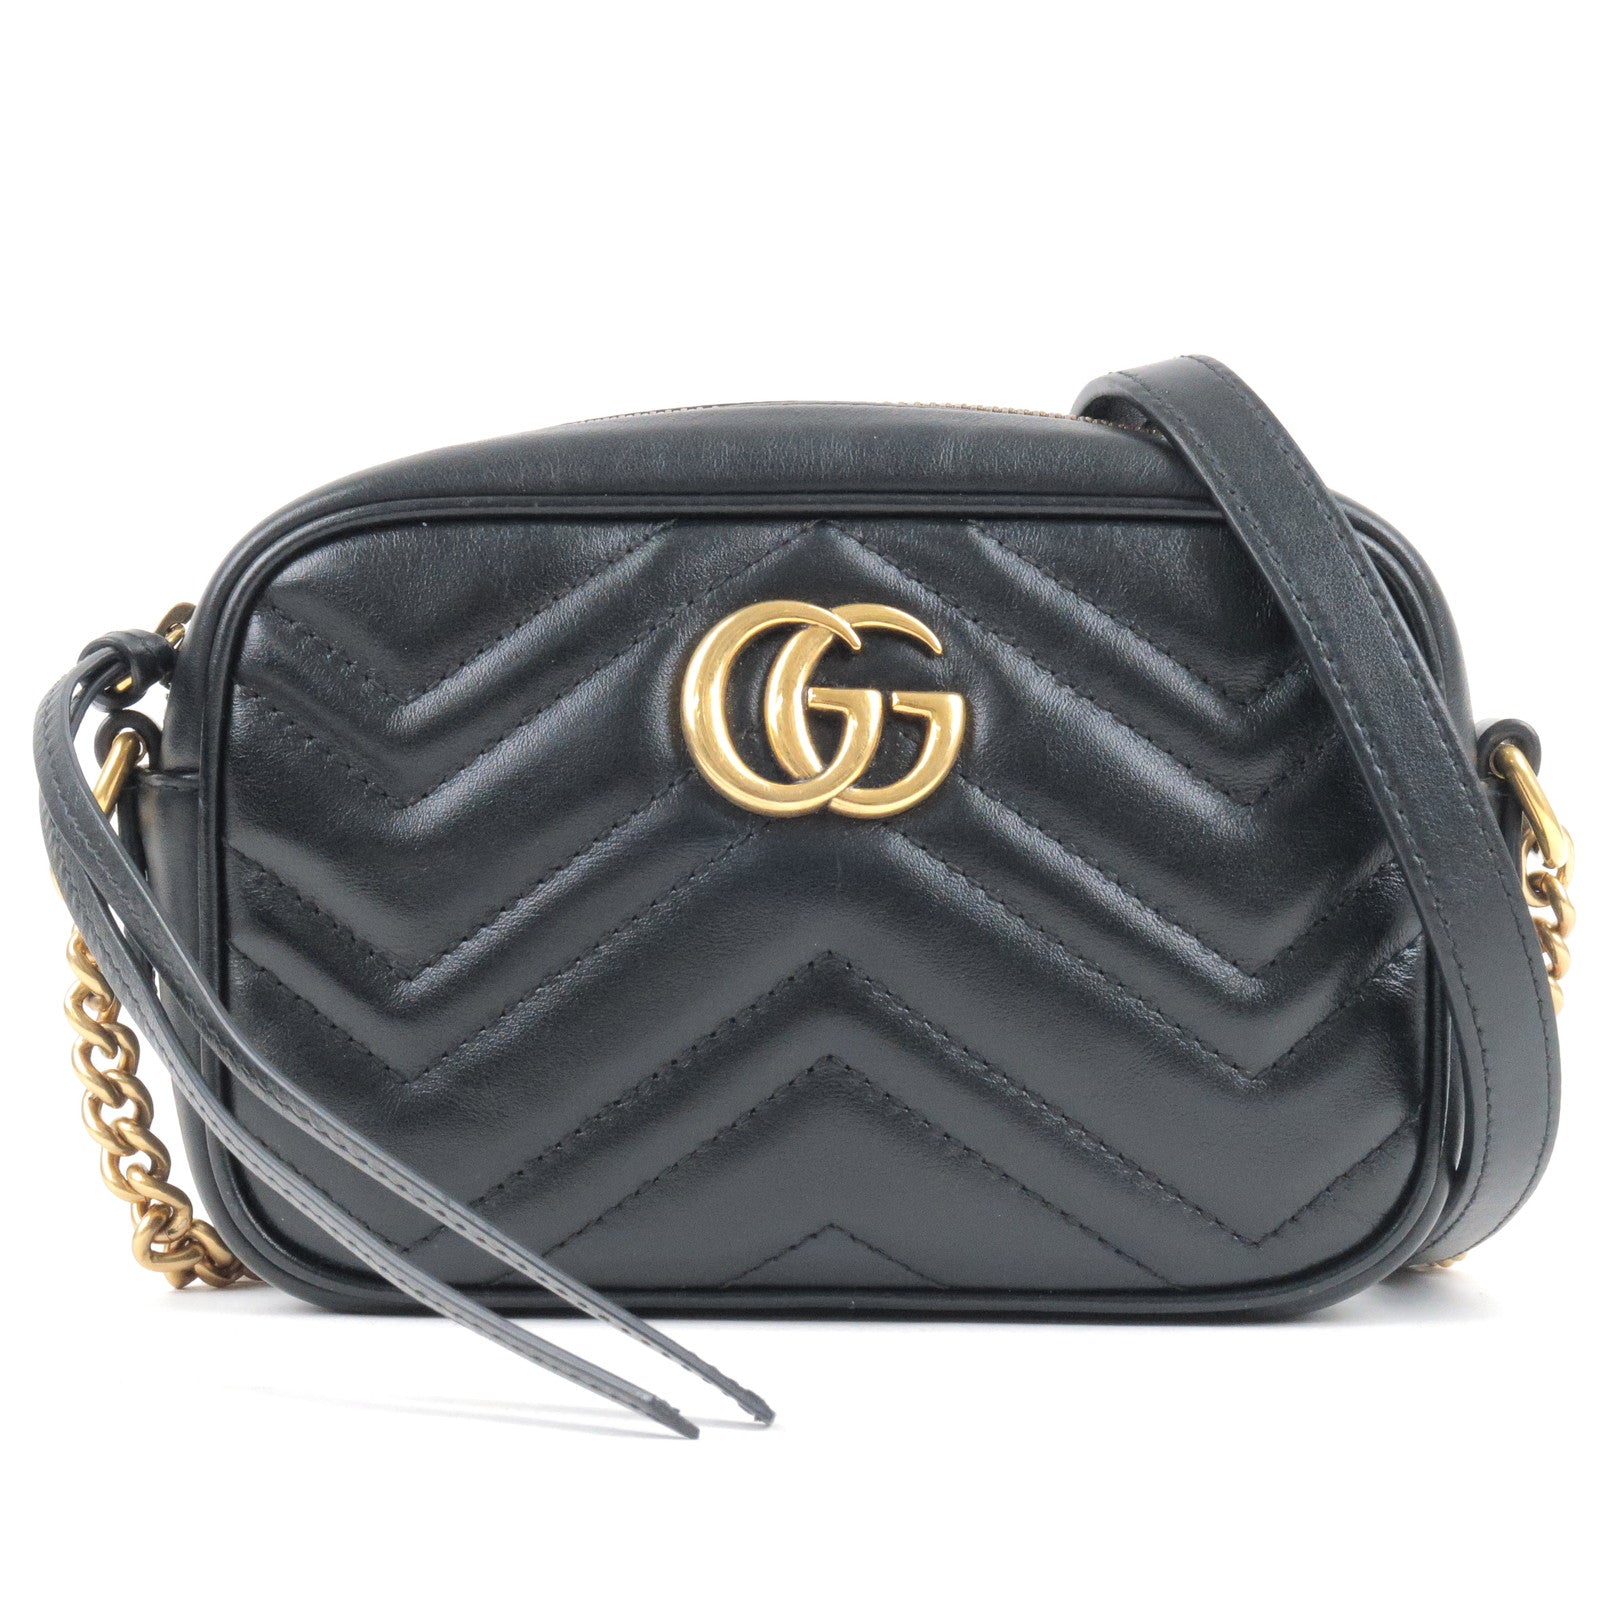 GUCCI-GG-Marmont-Leather-Chain-Shoulder-Bag-Black-448065